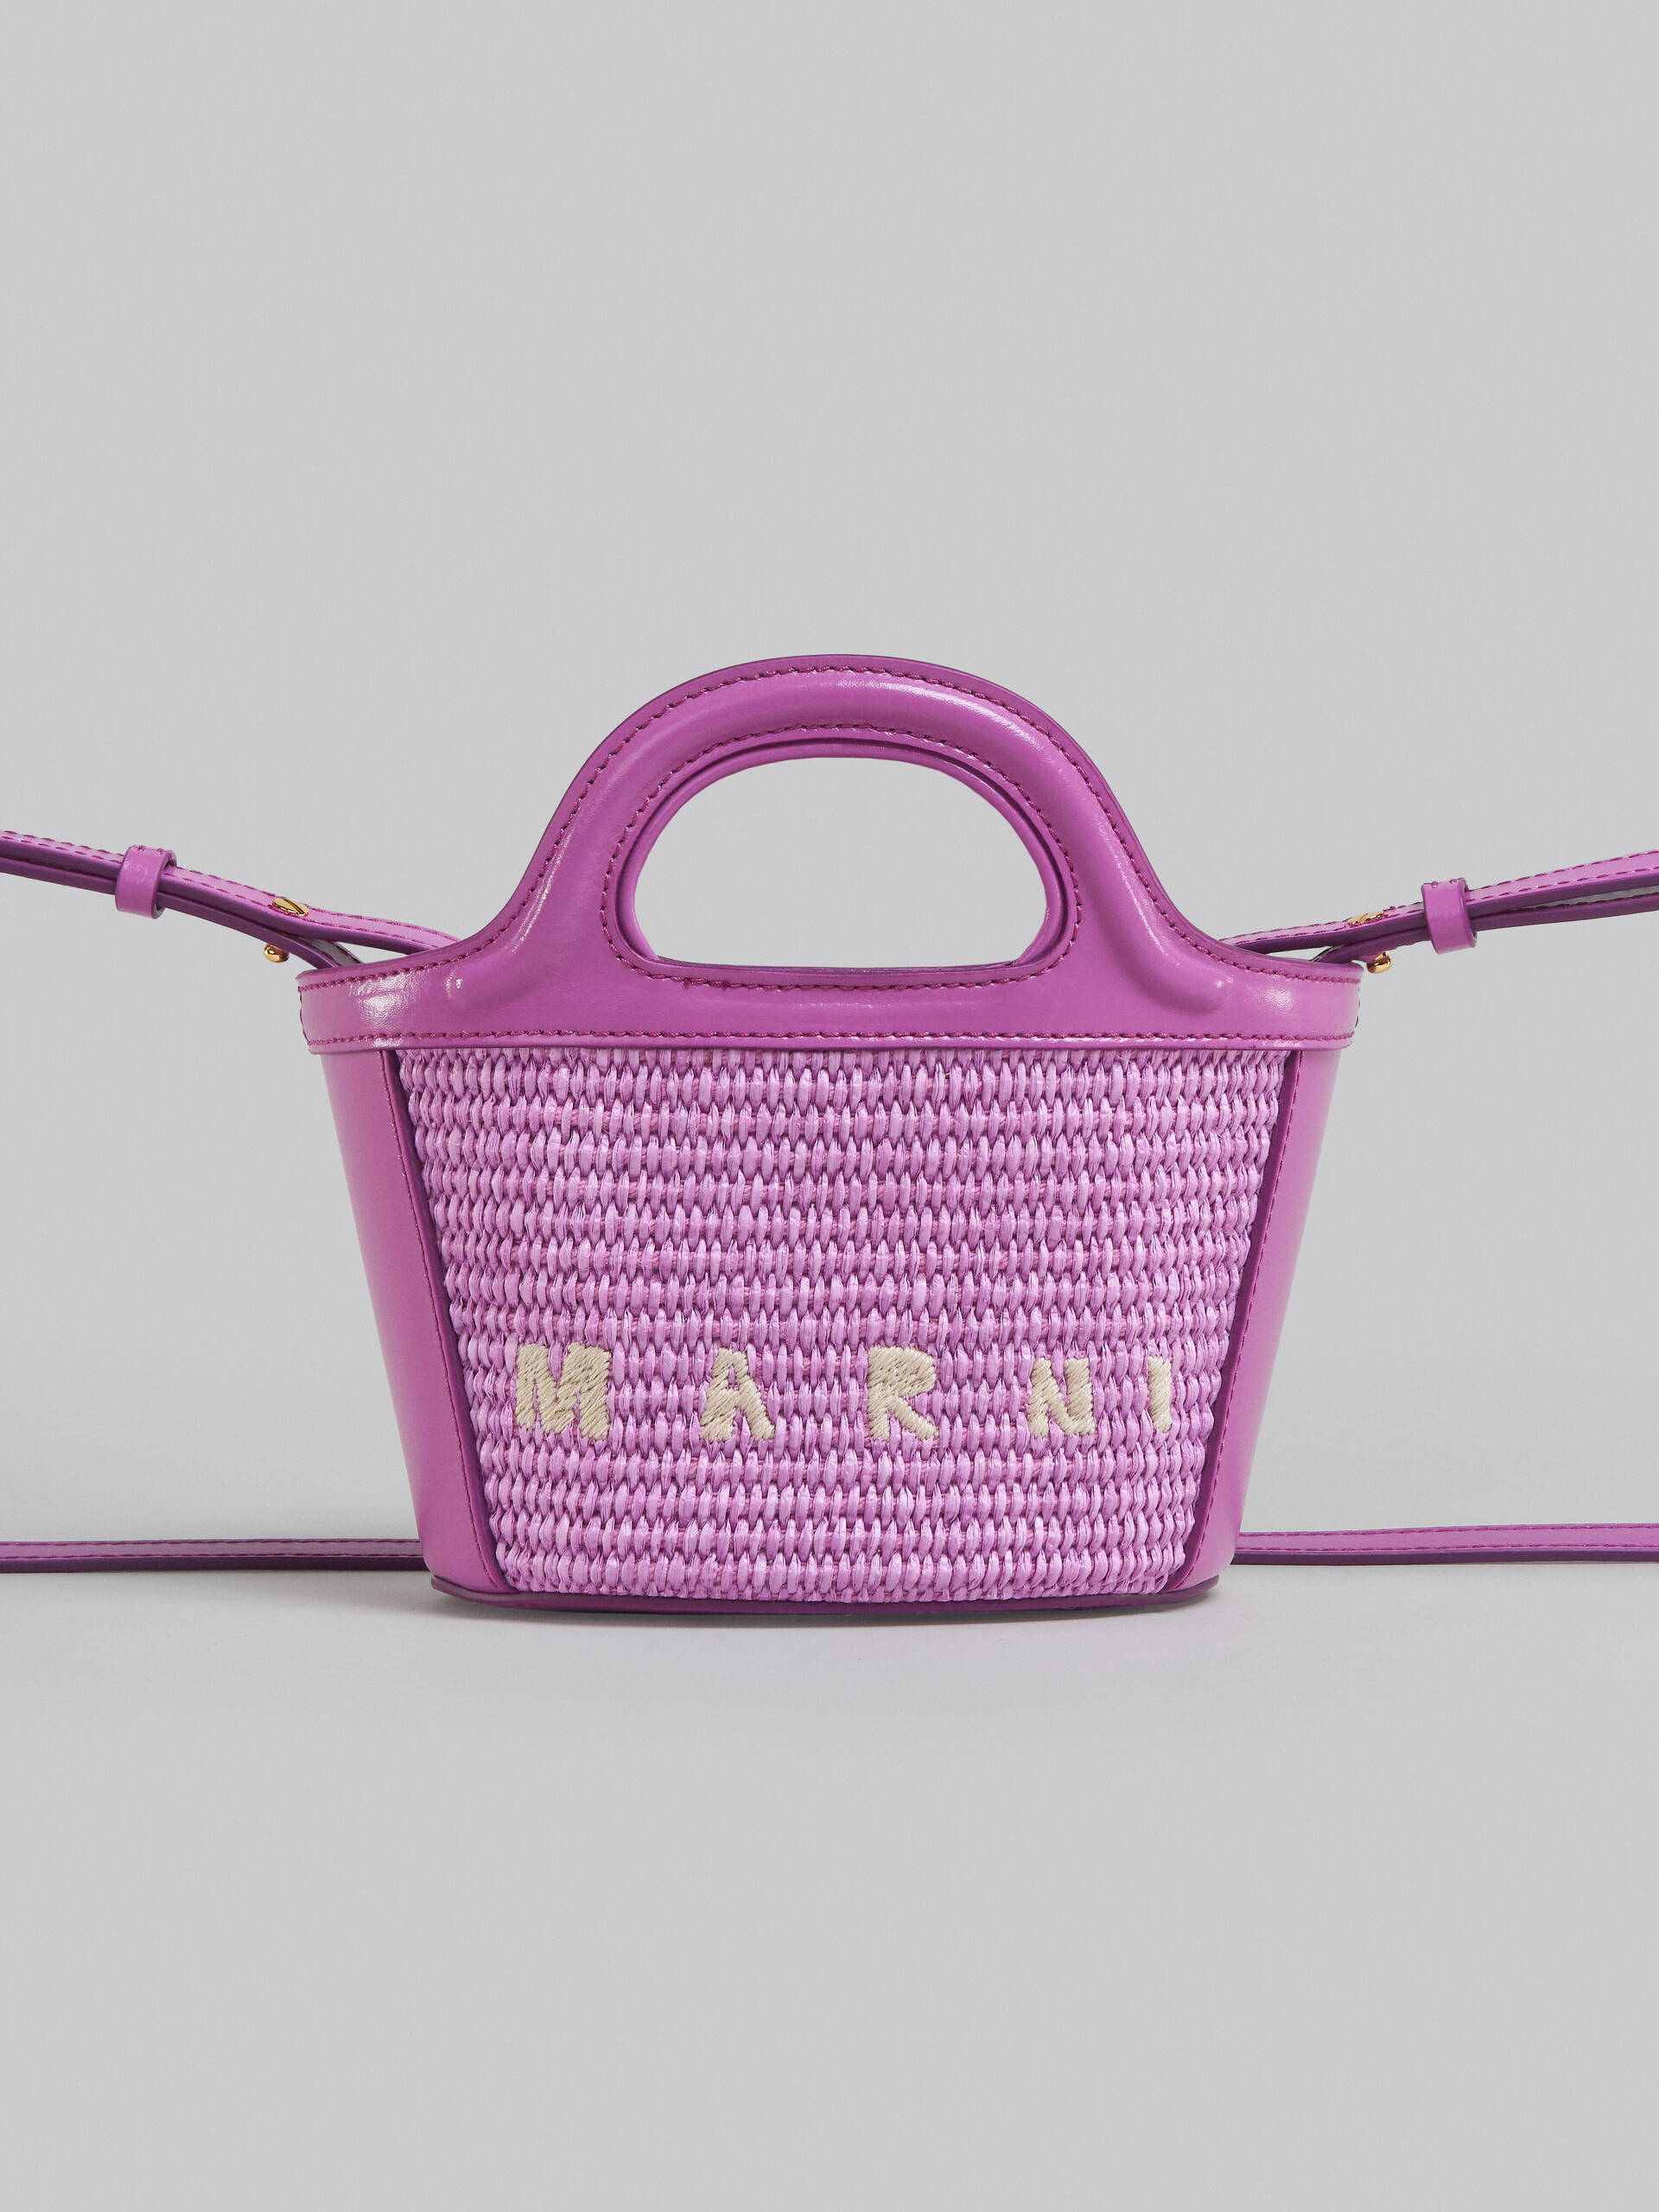 Tropicalia Micro Bag in lilac leather and raffia - Handbag - Image 5